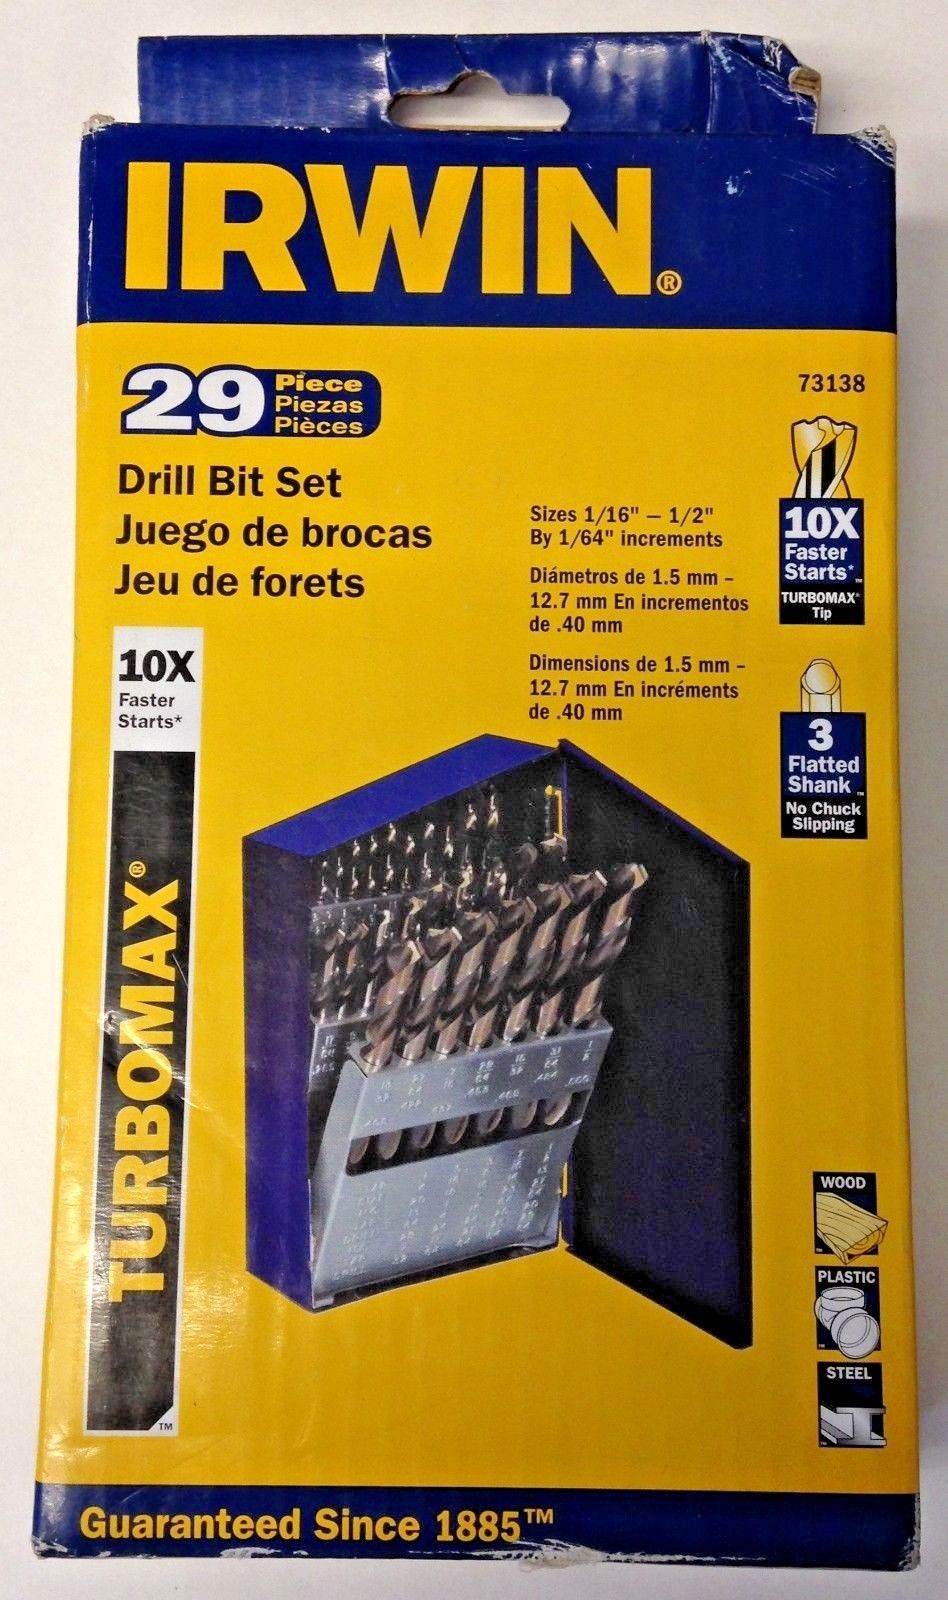 Irwin 73138 29 Piece Turbomax Drill Bit Set 1/16" To 1/2"